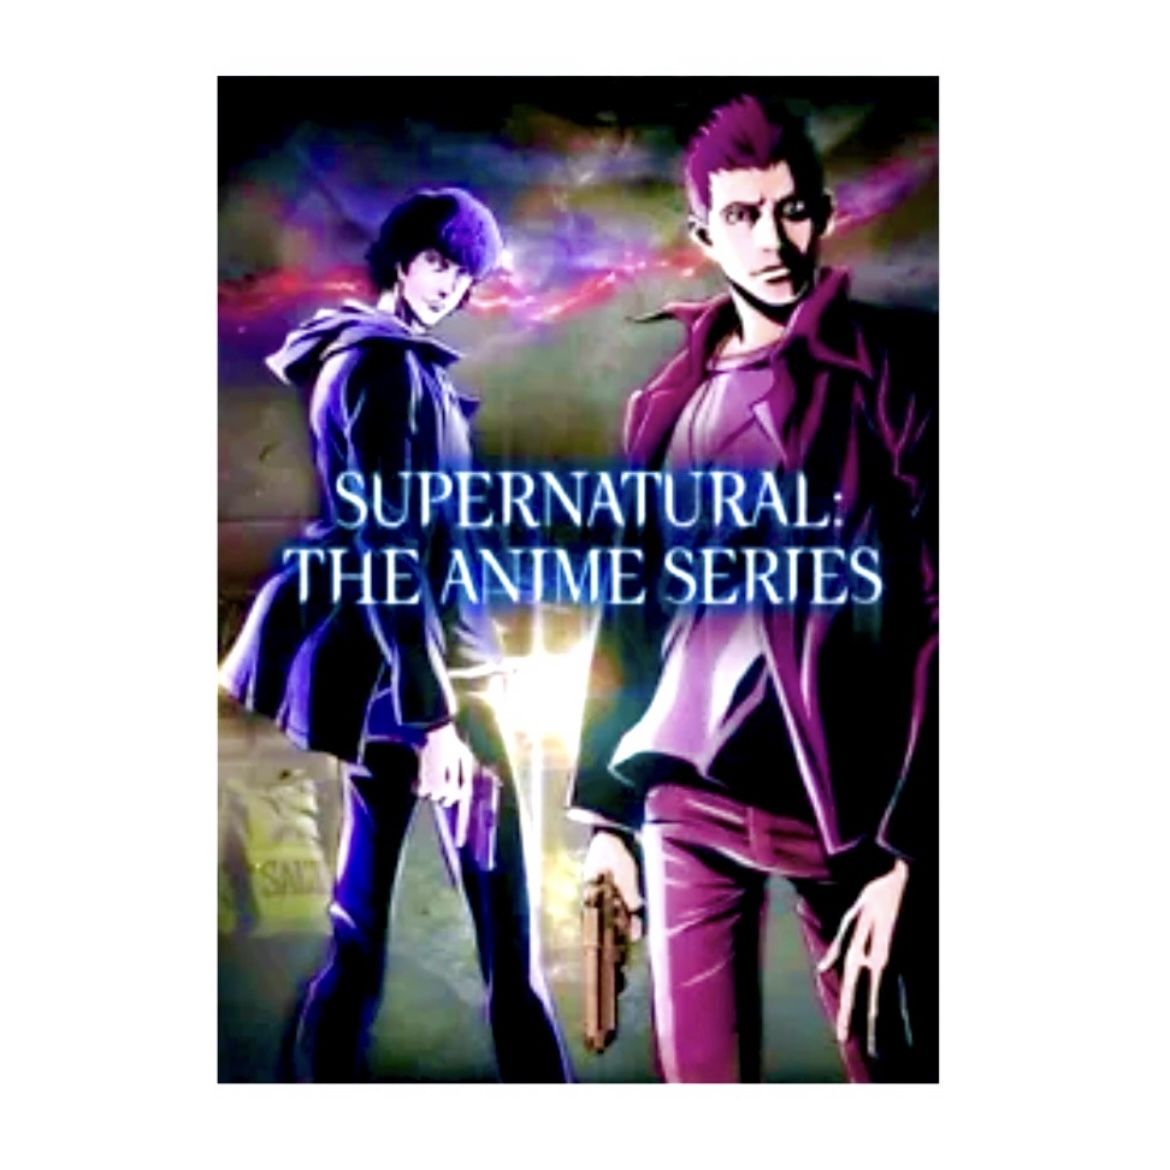 Supernatural: The Anime Series (DVD, 2011, 3-Disc Set)